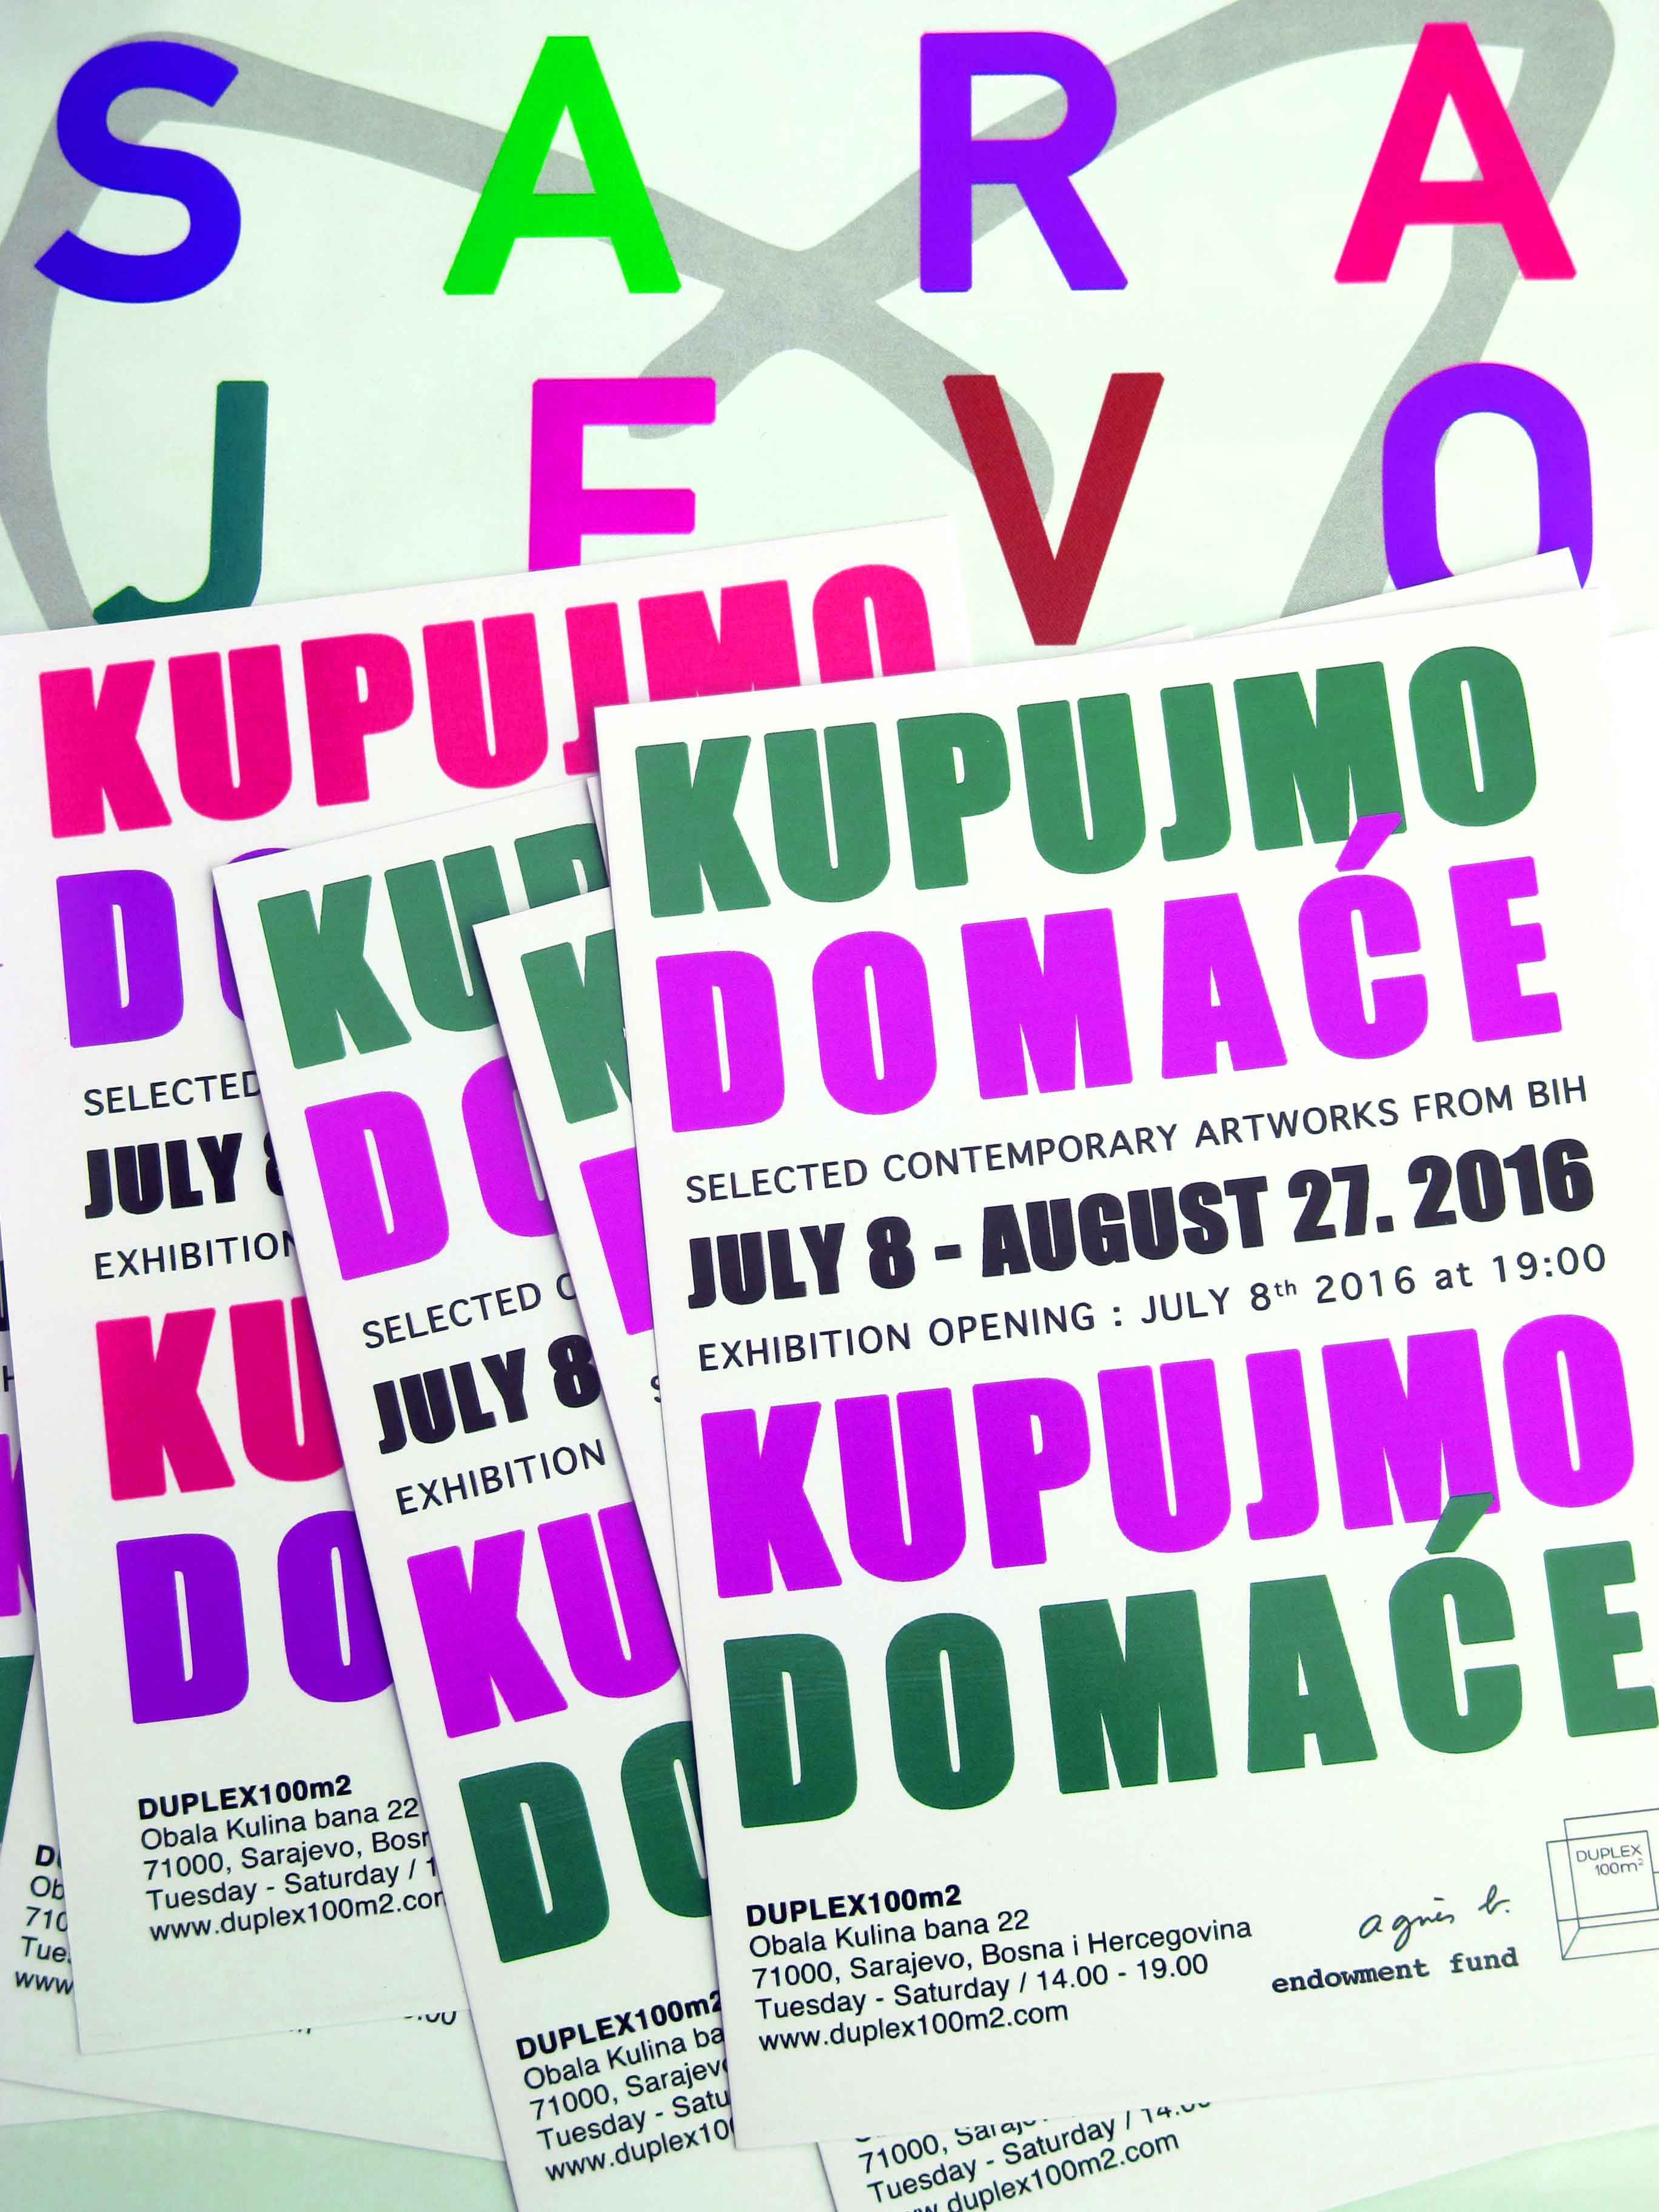 Domace apero - Kupjumo Domace - August 2016